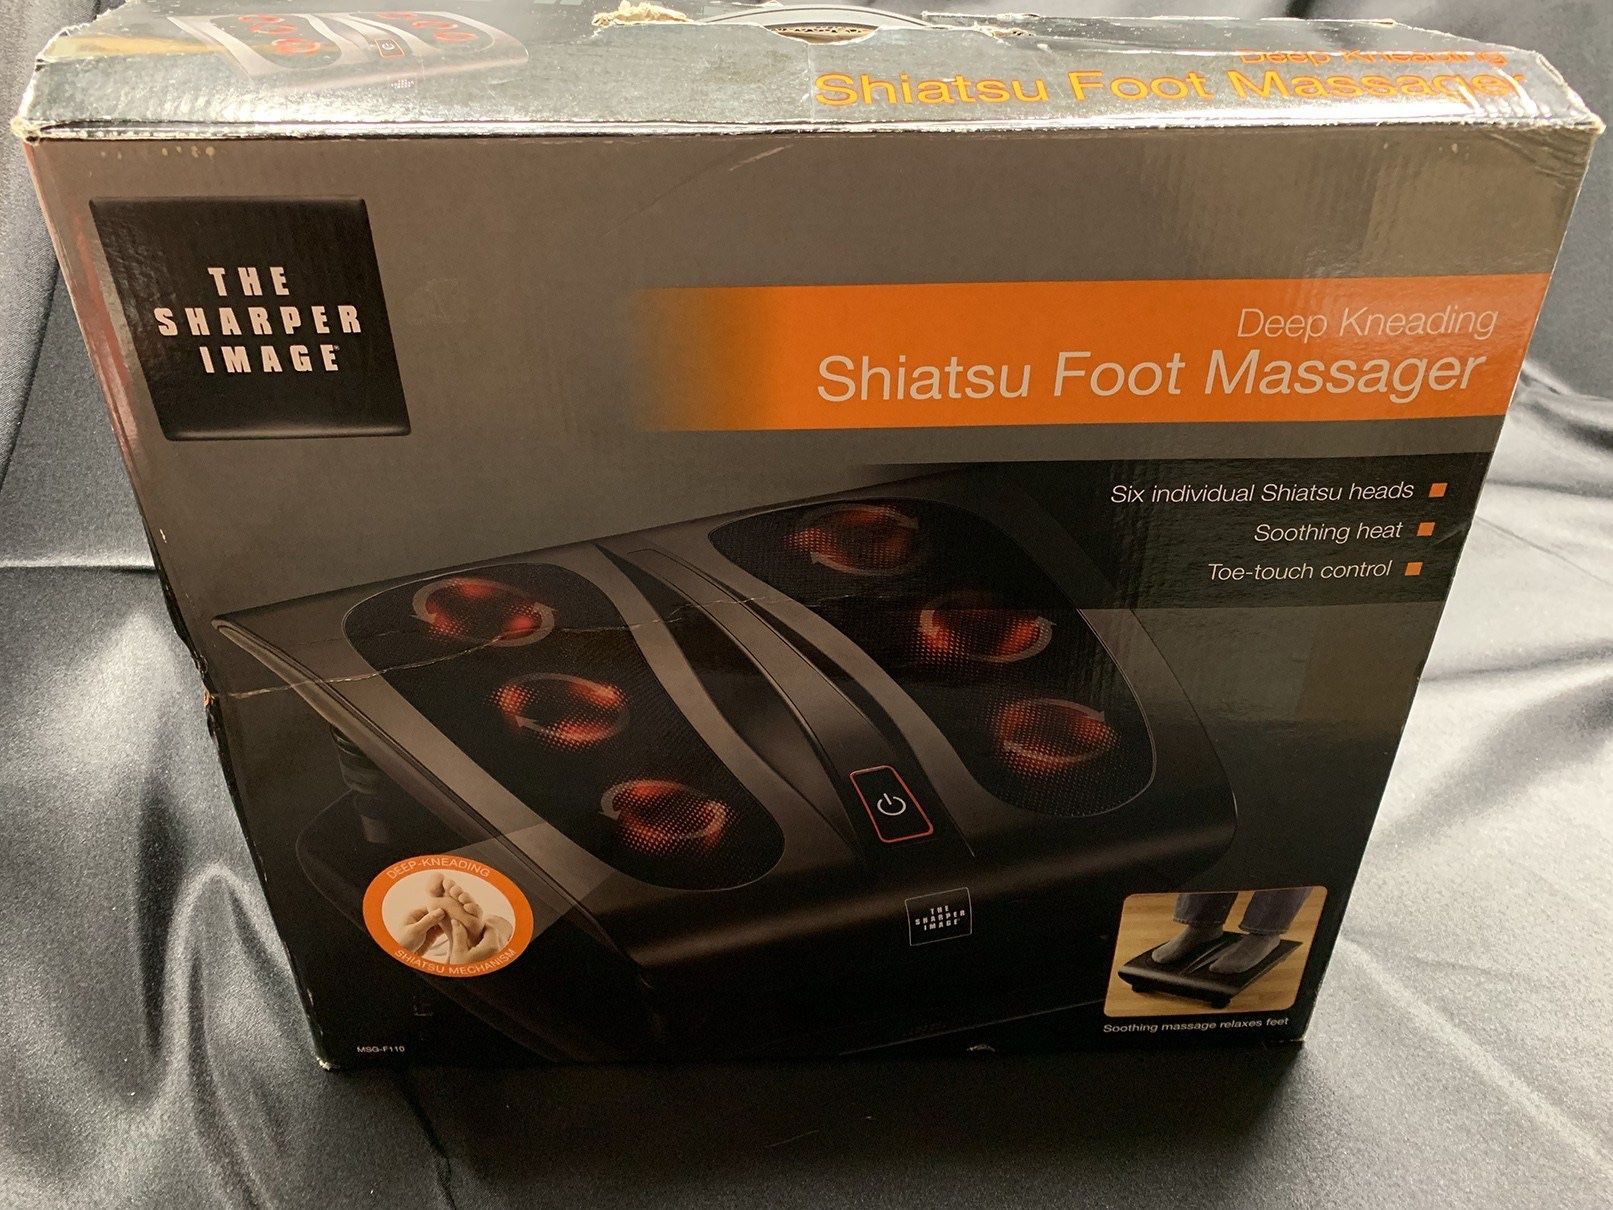 Sharper Image Deep Kneading Shiatsu Foot Massager